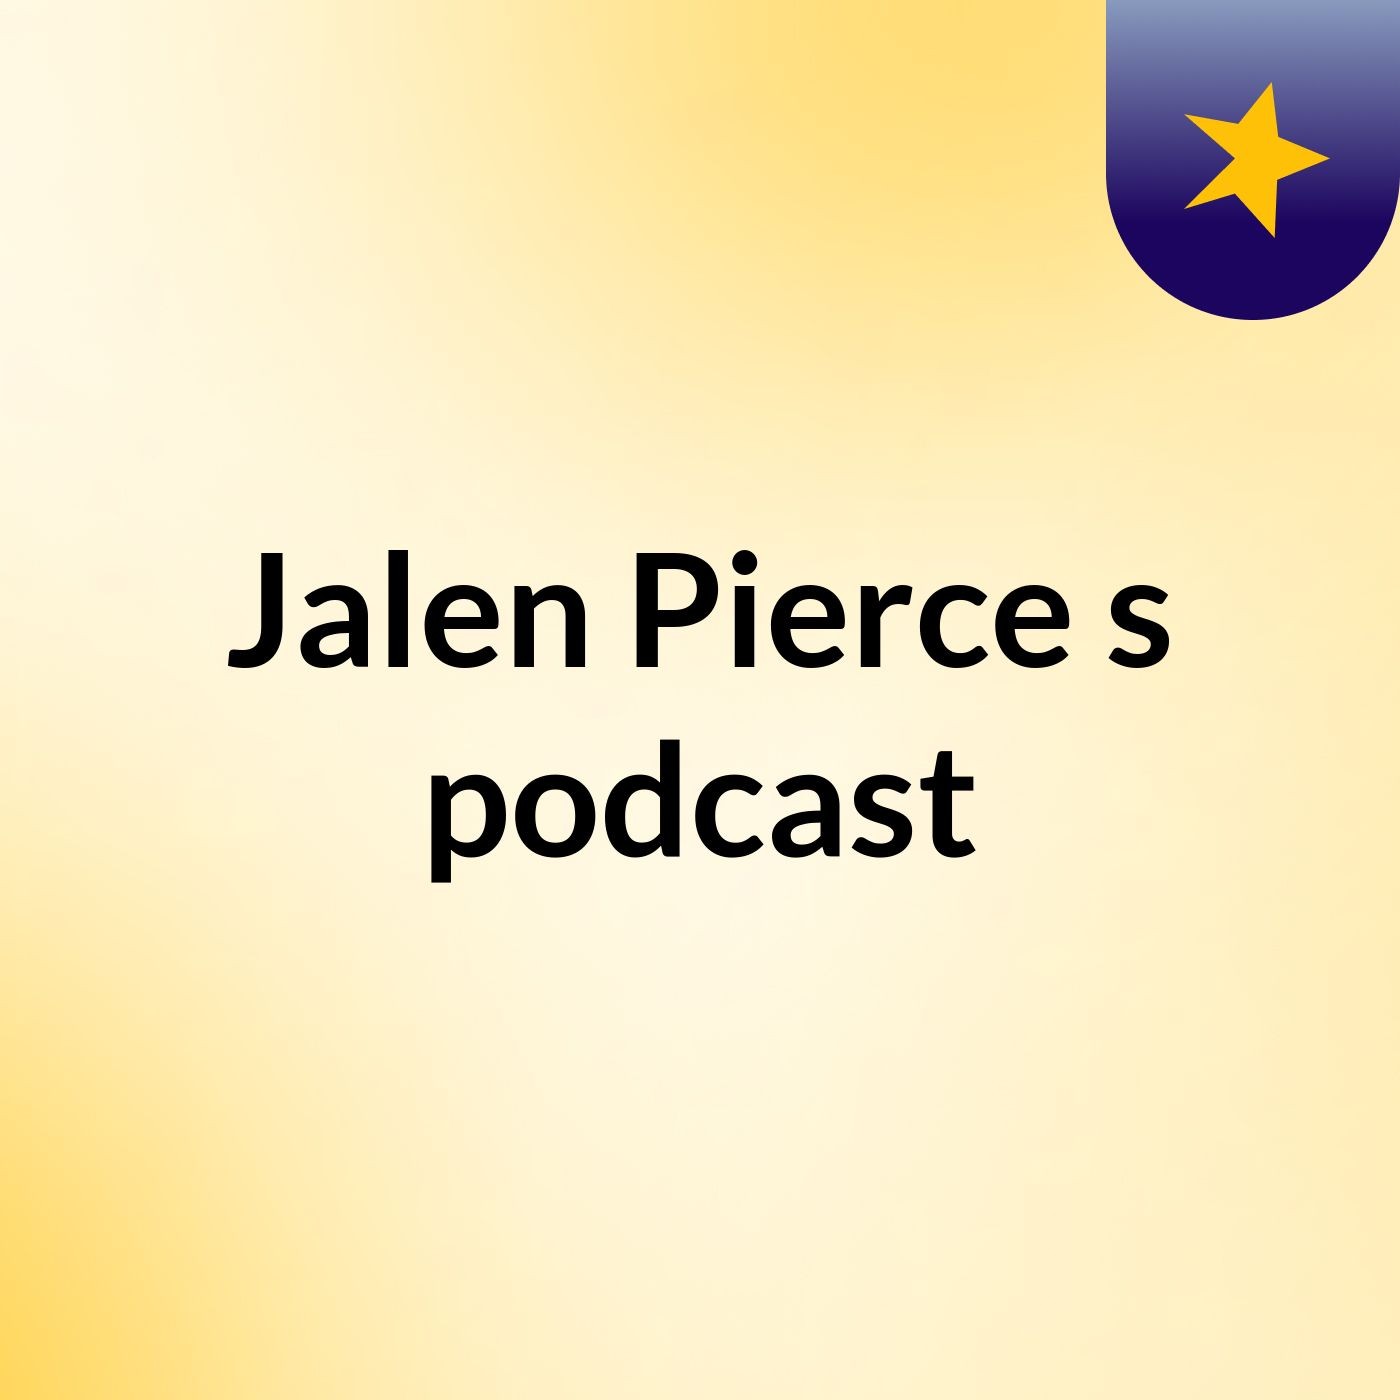 Episode 4 - Jalen Pierce's podcast